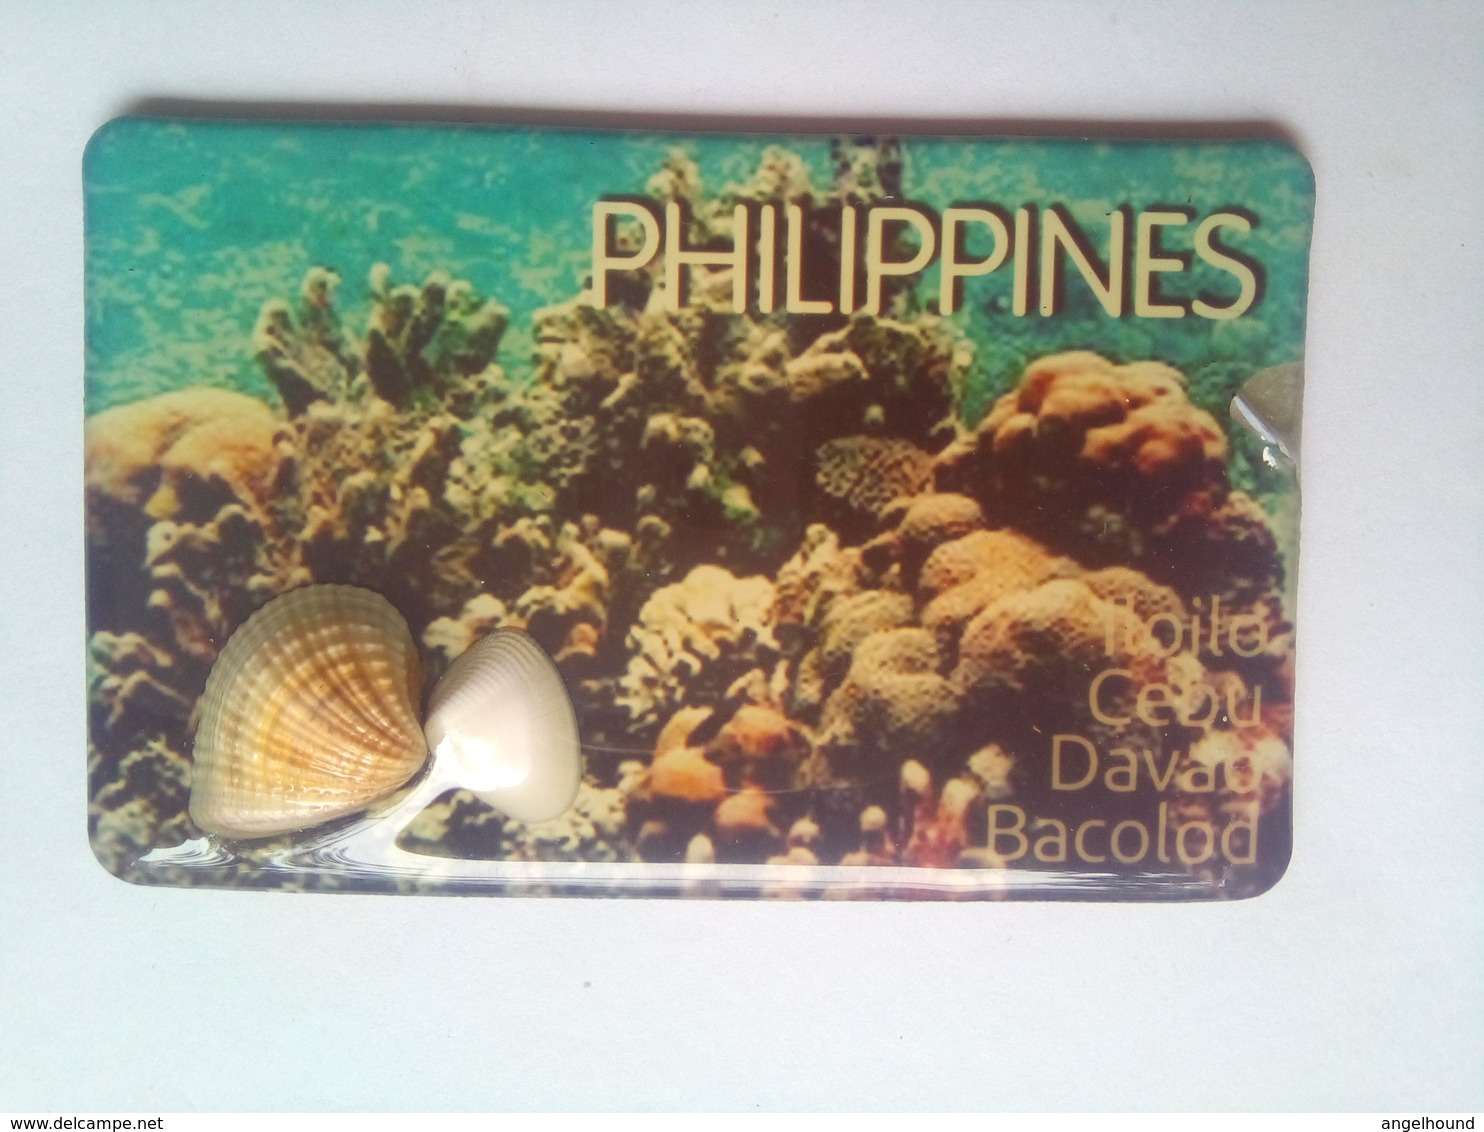 Shells Iloilo Cebu Davao Bacolod - Transporte